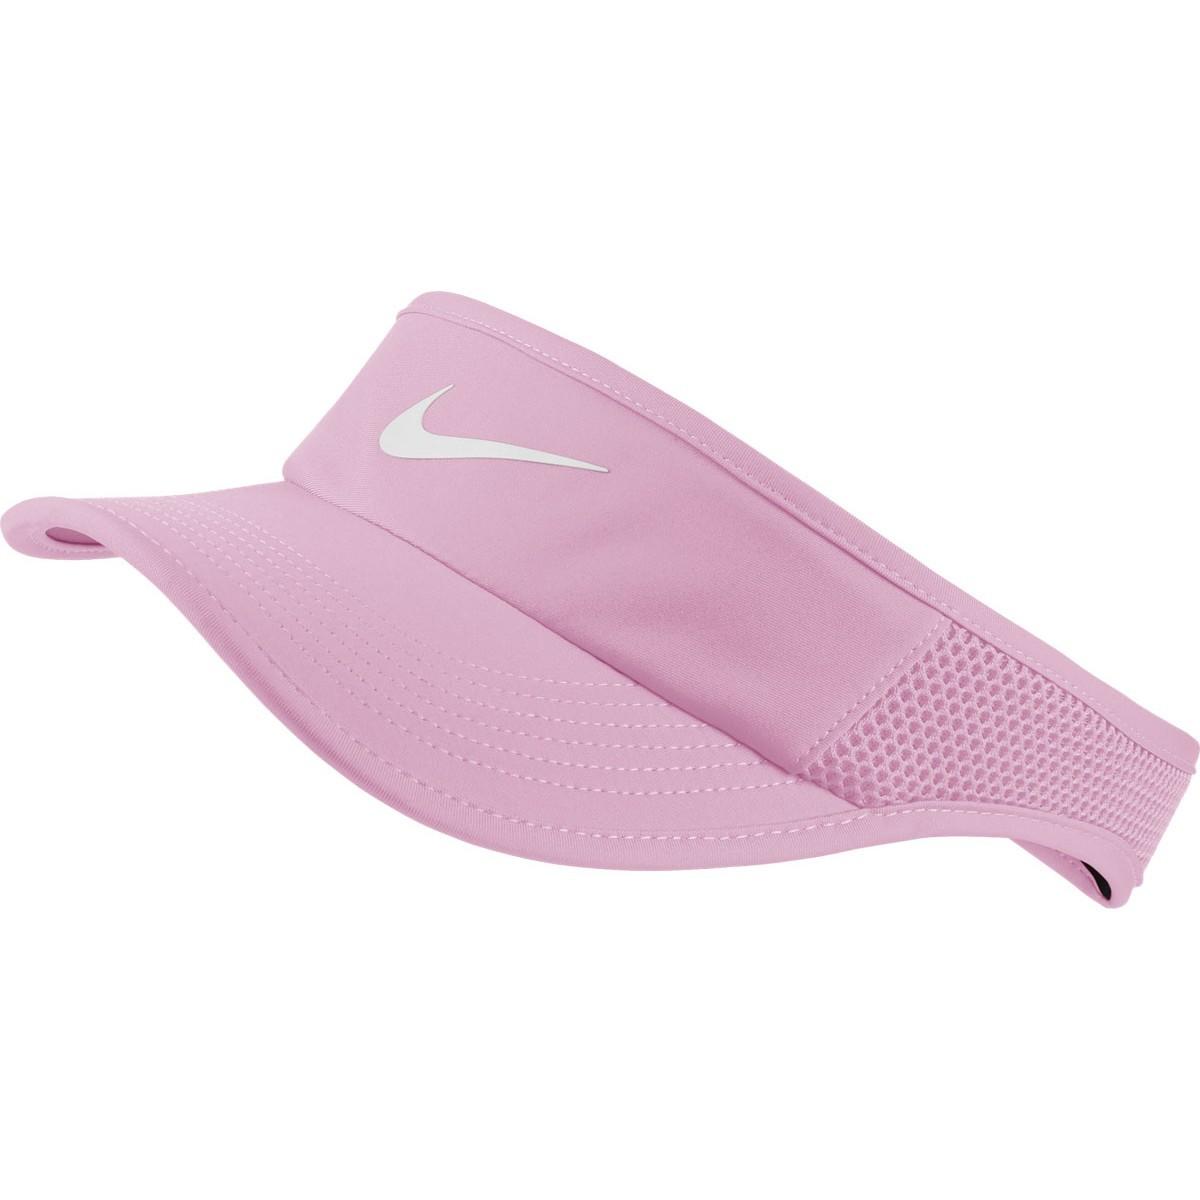 Козырек Nike Aerobill Feather Light Visor pink rise/white